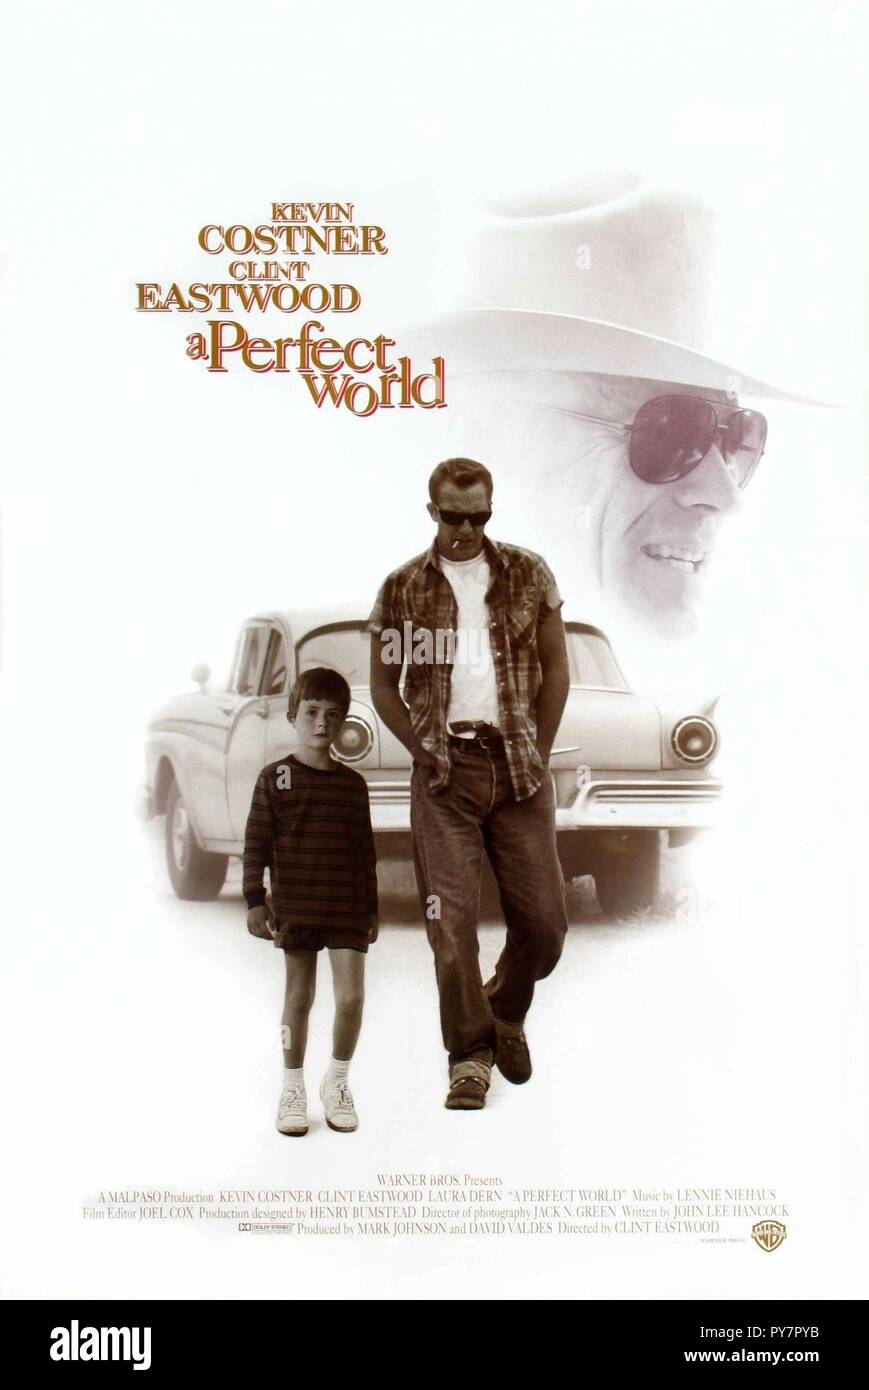 Original film title: A PERFECT WORLD. English title: A PERFECT WORLD. Year: 1993. Director: CLINT EASTWOOD. Credit: WARNER BROTHERS / Album Stock Photo